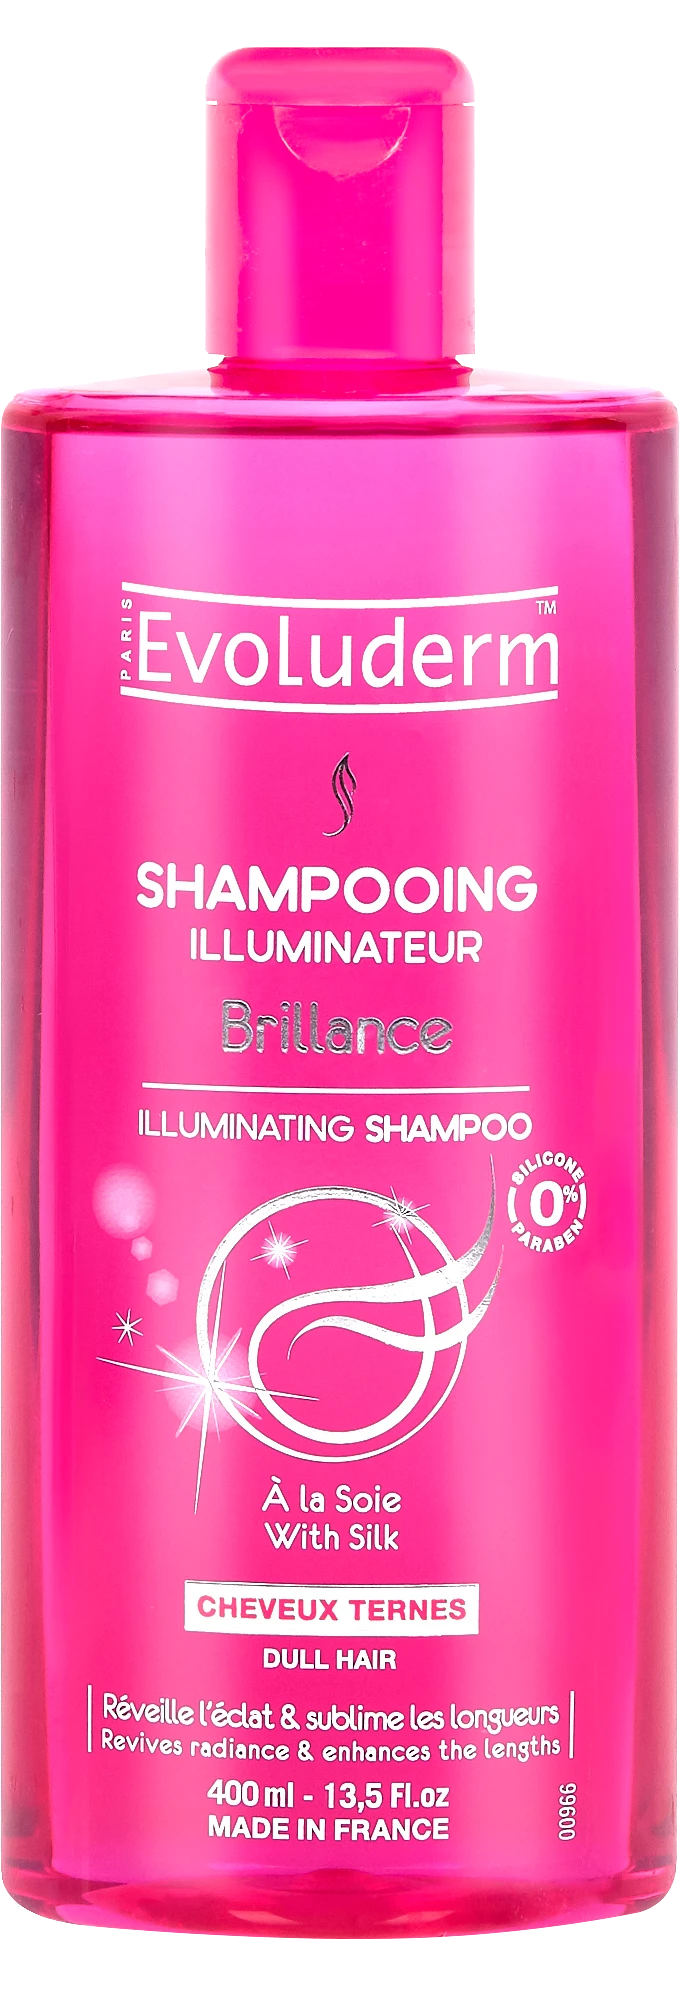 Shampooing Illuminateur Brillance, 400 ml - EVOLUDERM